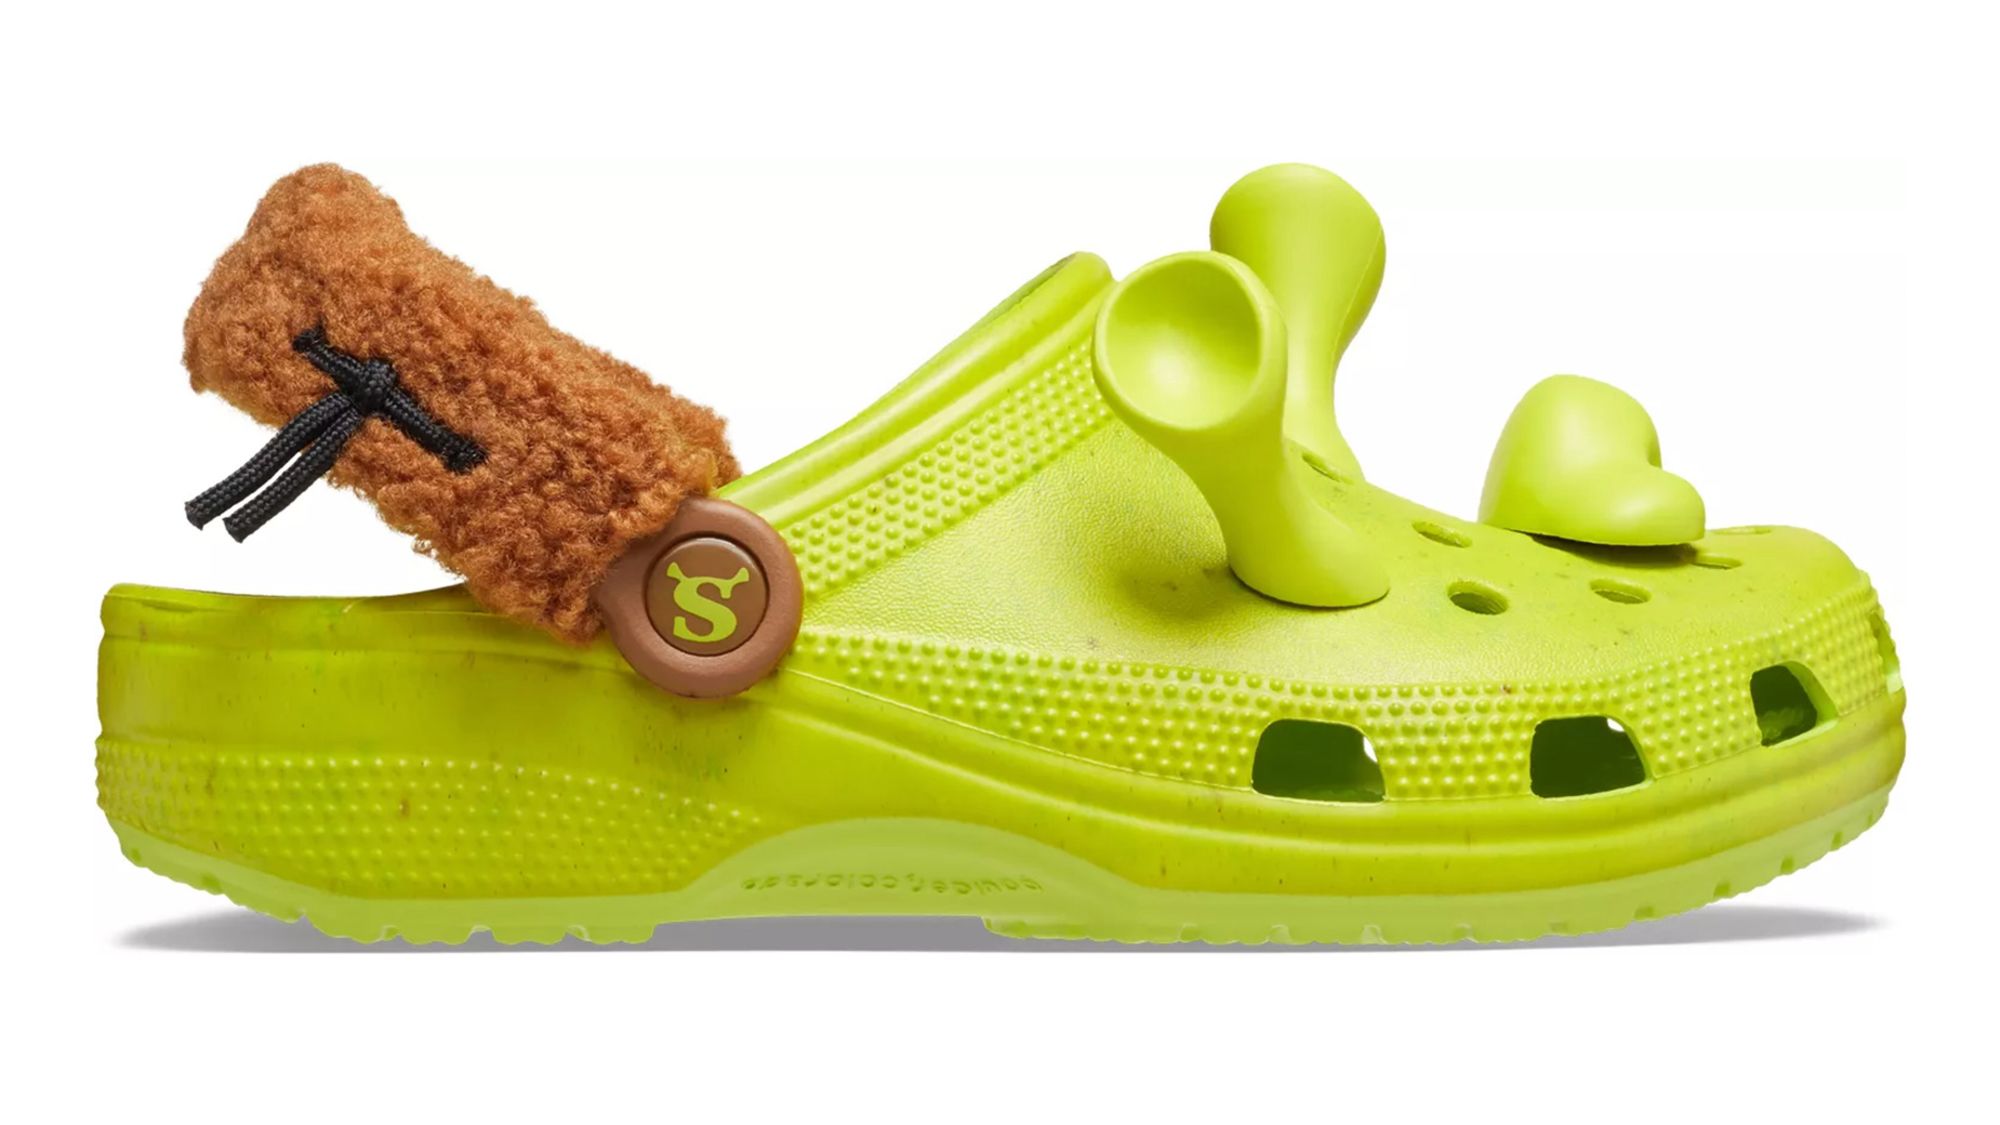 Shrek Crocs are officially real | CNN